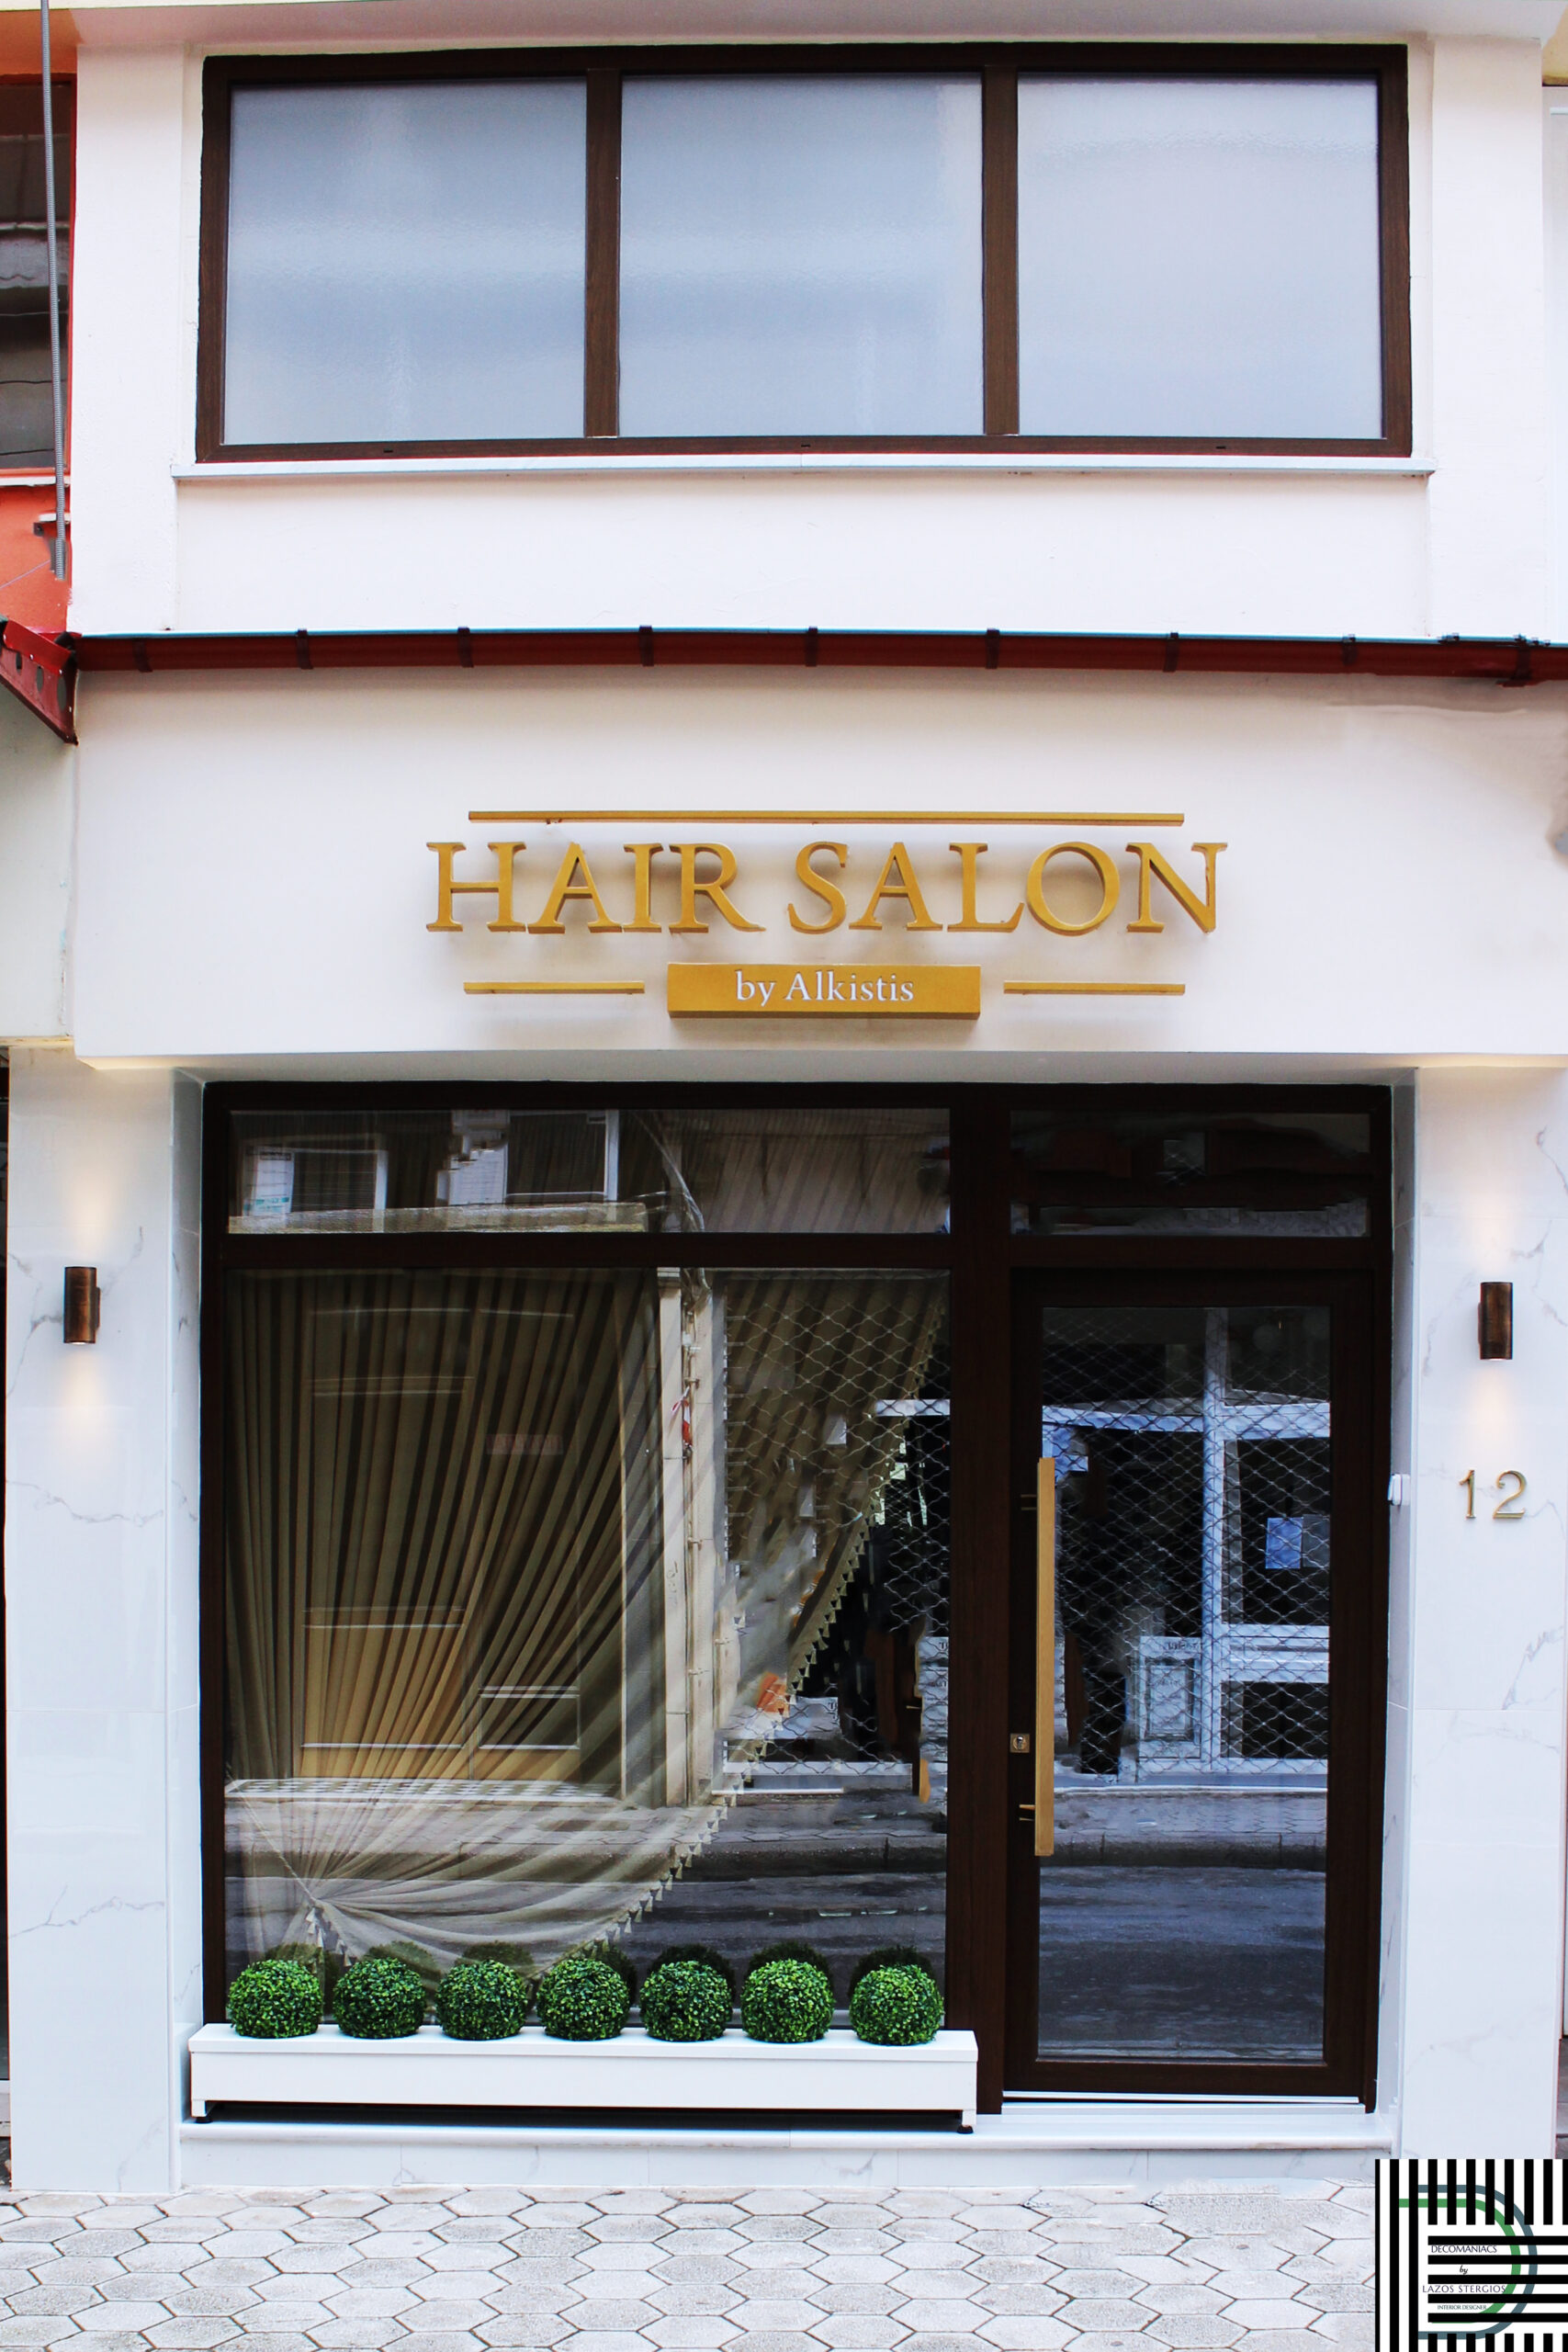 Hair Salon by Alkistis